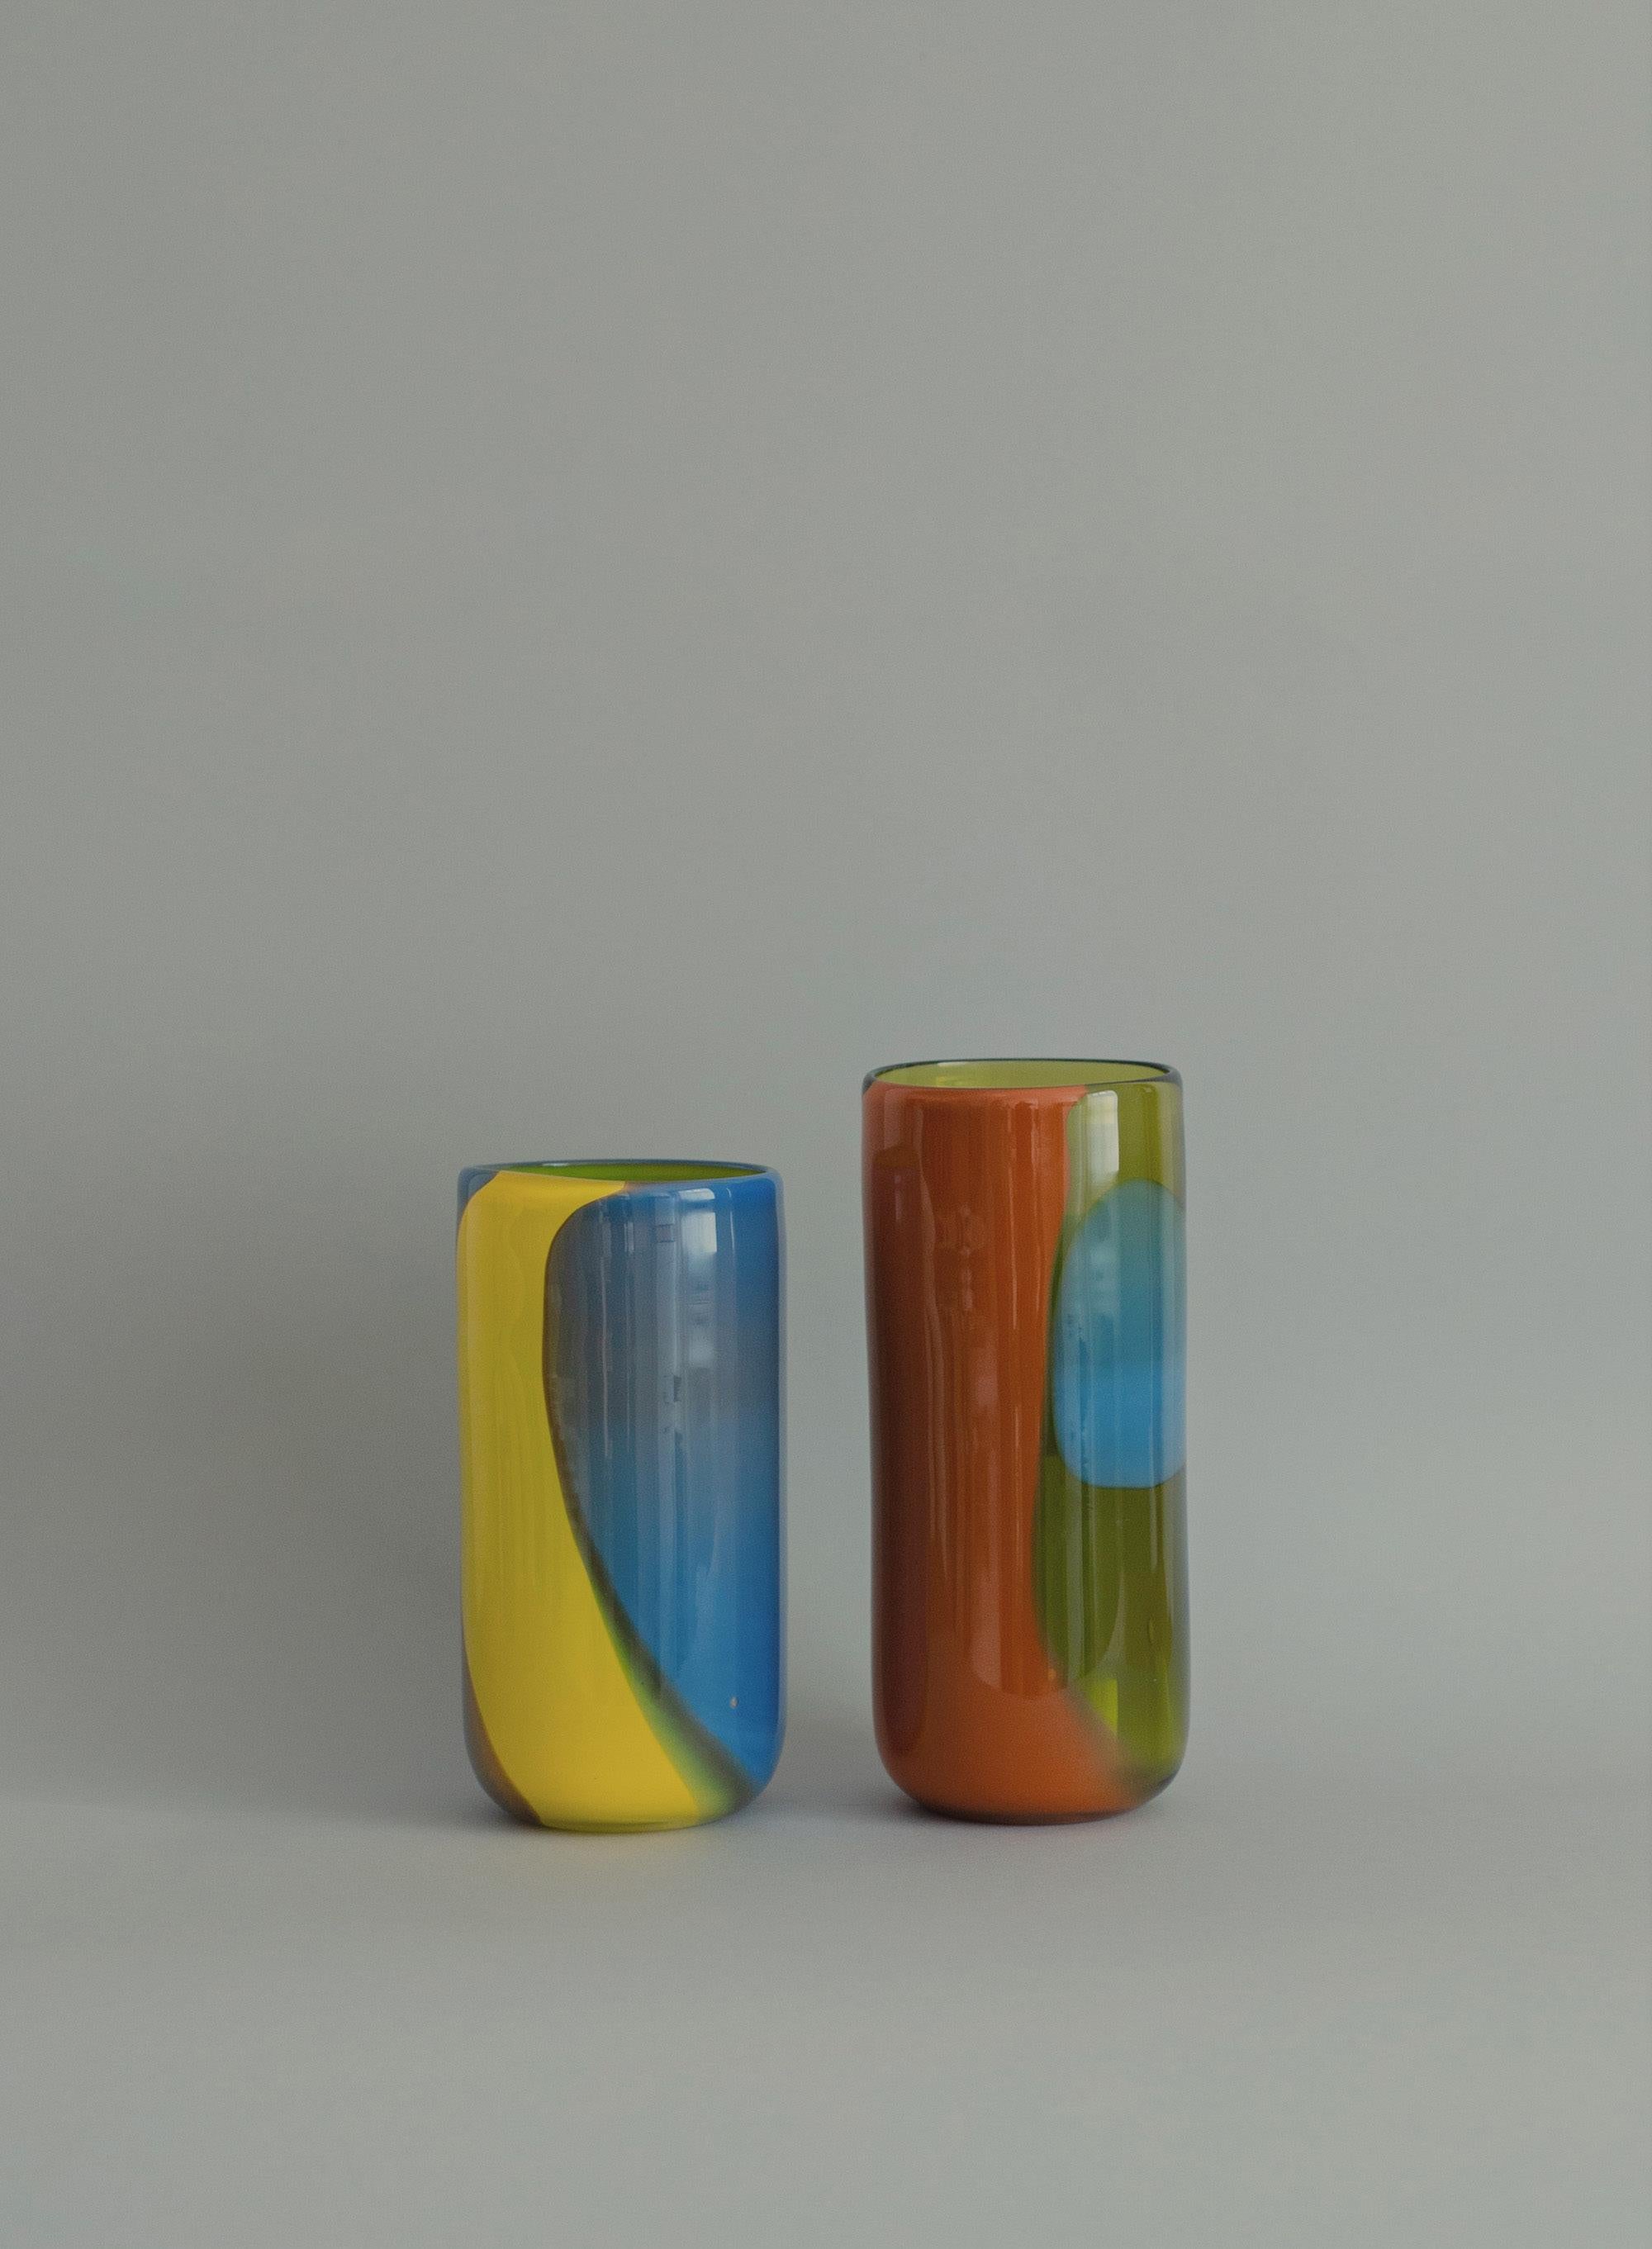 Other Lightscape Vase by Derya Arpac For Sale